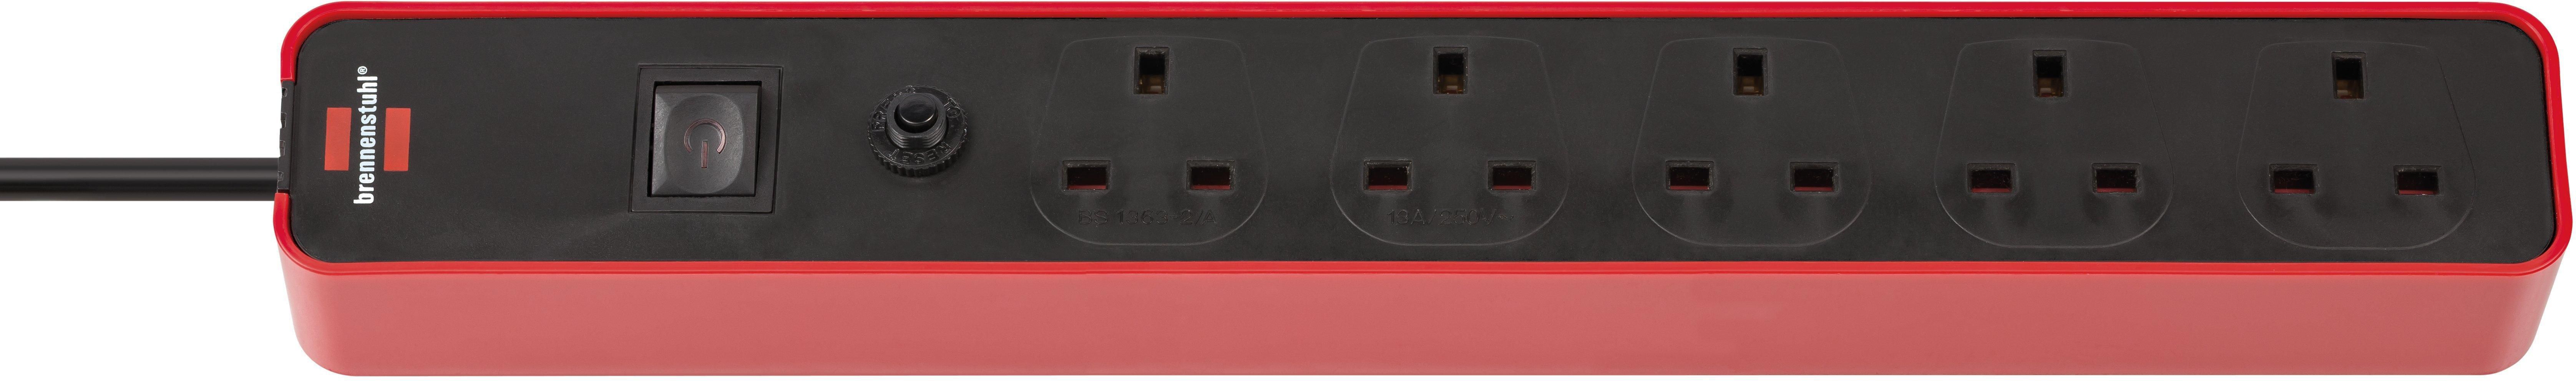 Brennenstuhl, Power Extension Cord, 5 Sockets, 1.5M Cord, Red Black